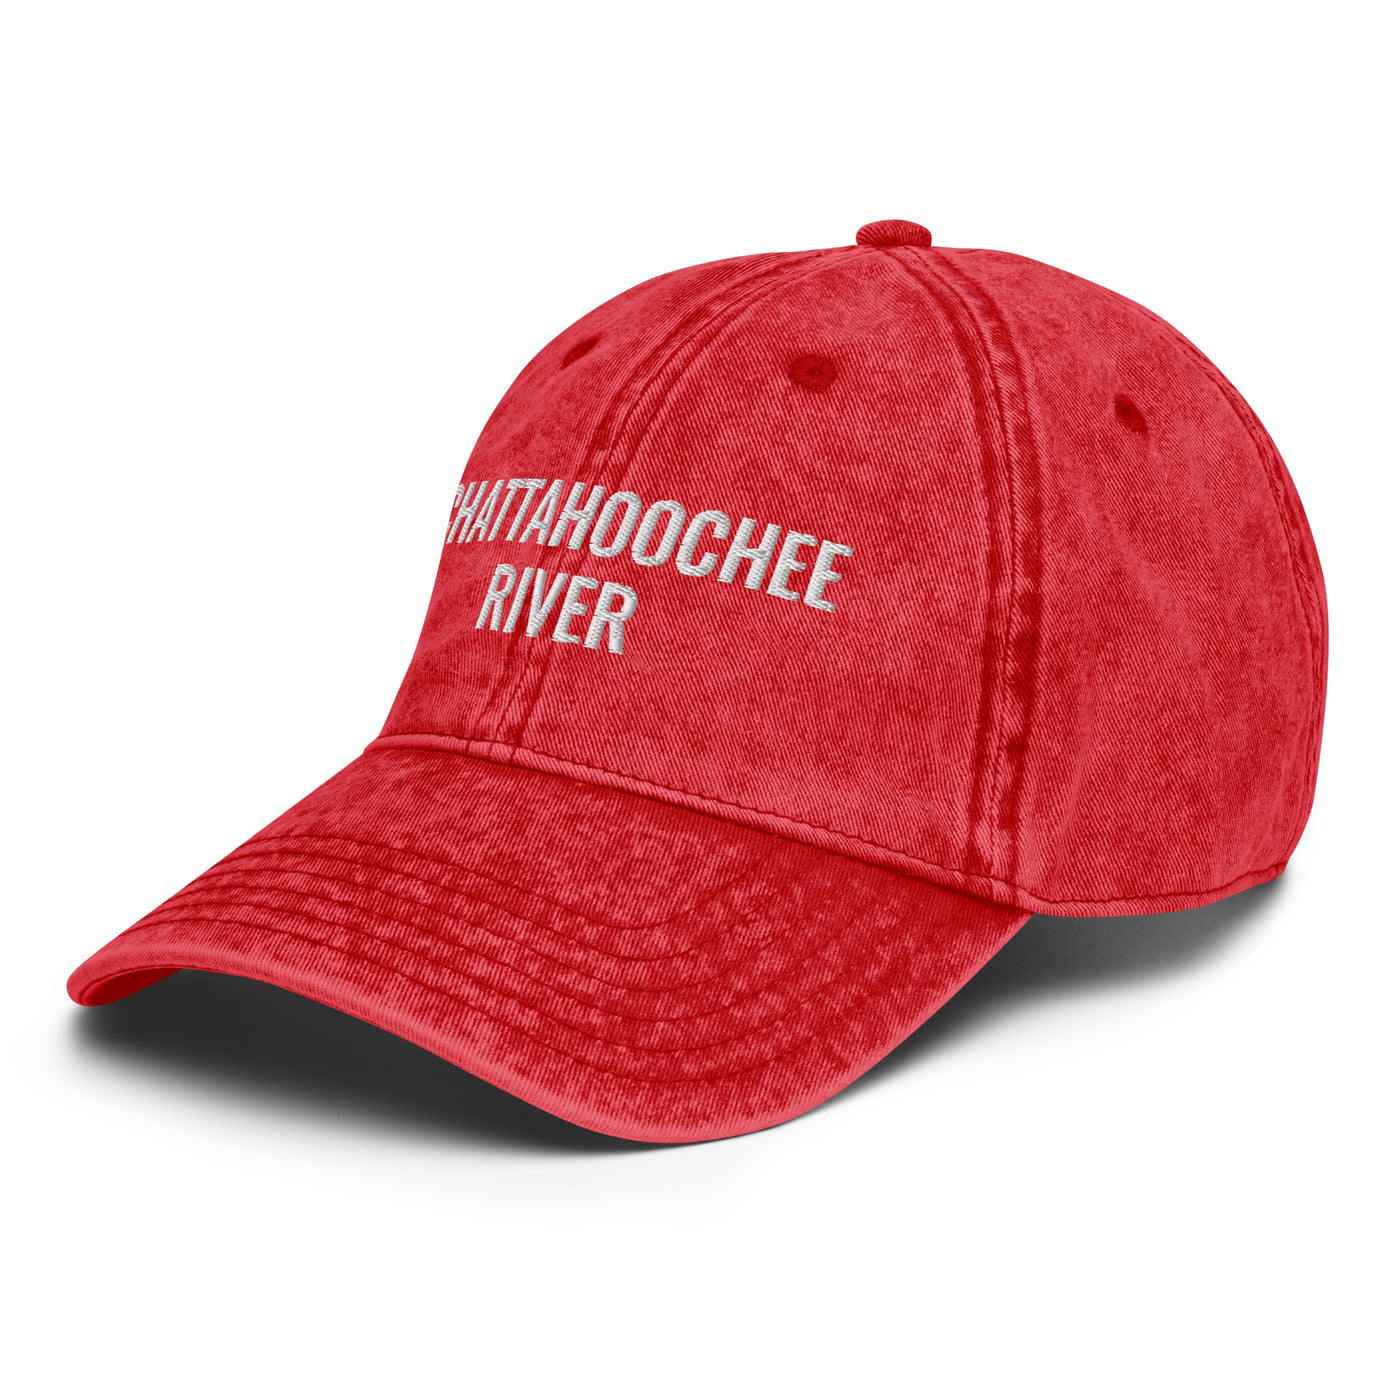 Chattahoochee River Hat Hats Ezra's Clothing   